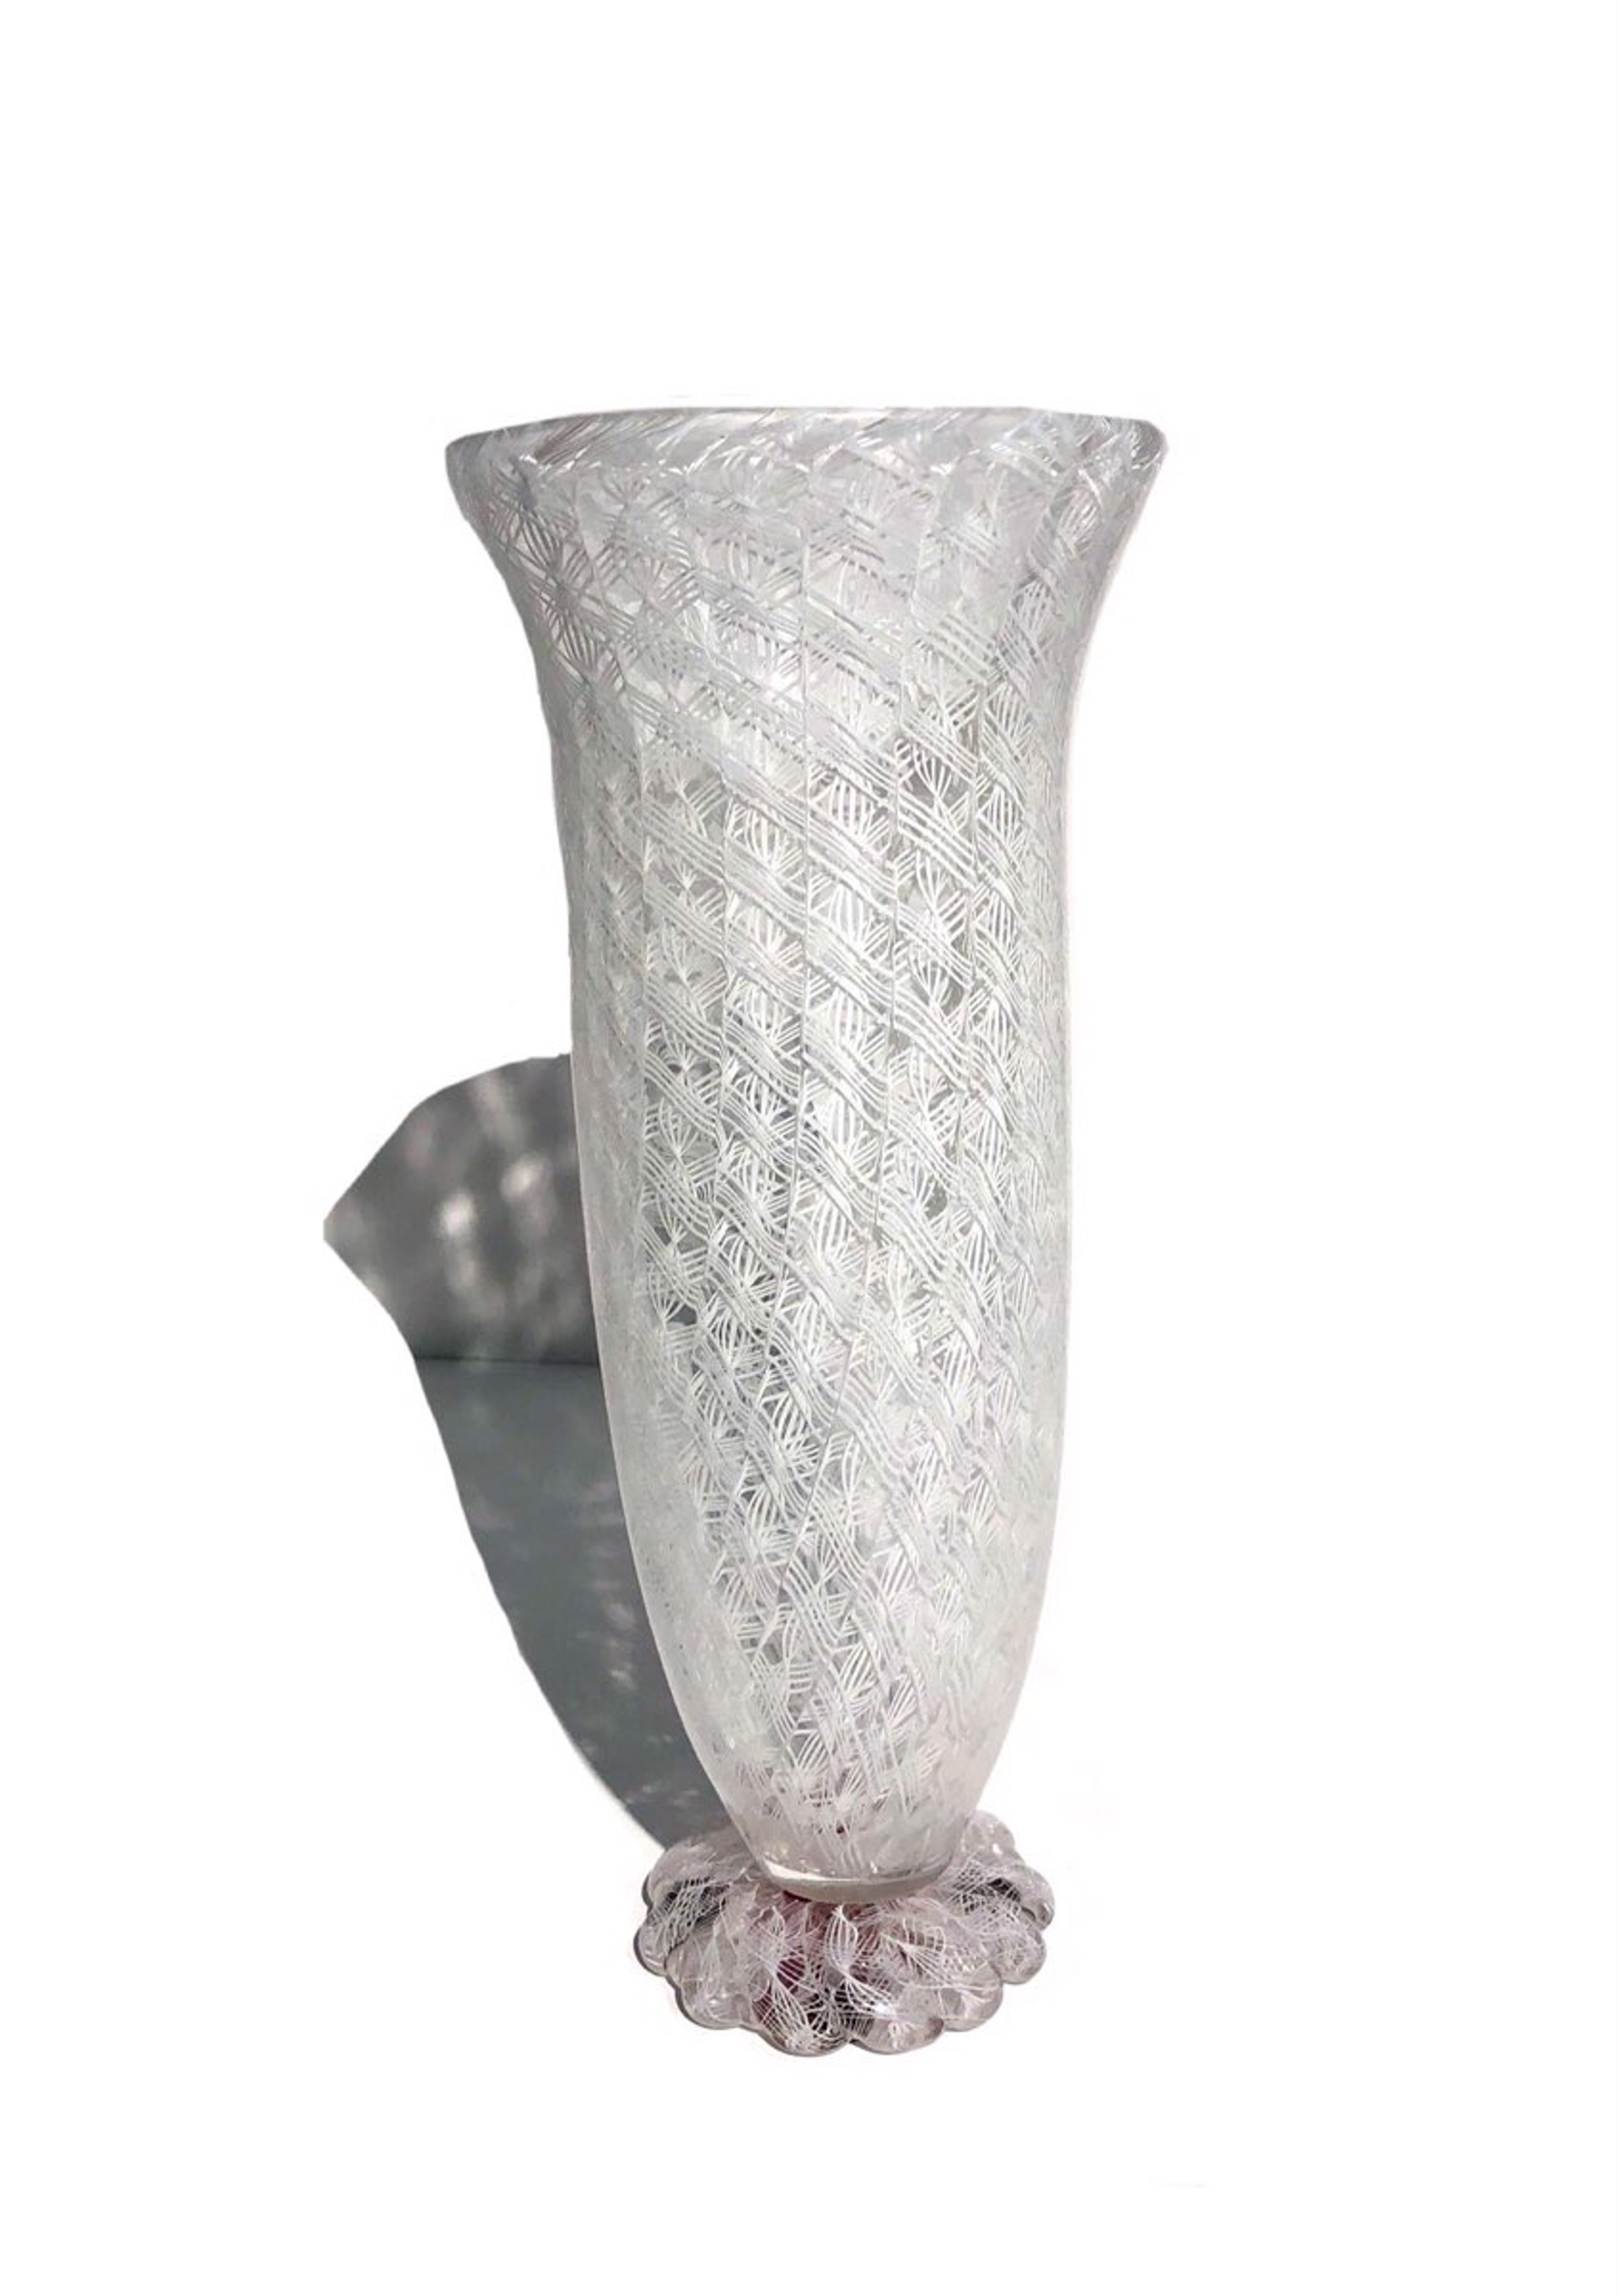 White Cane Vase by Algar Dole